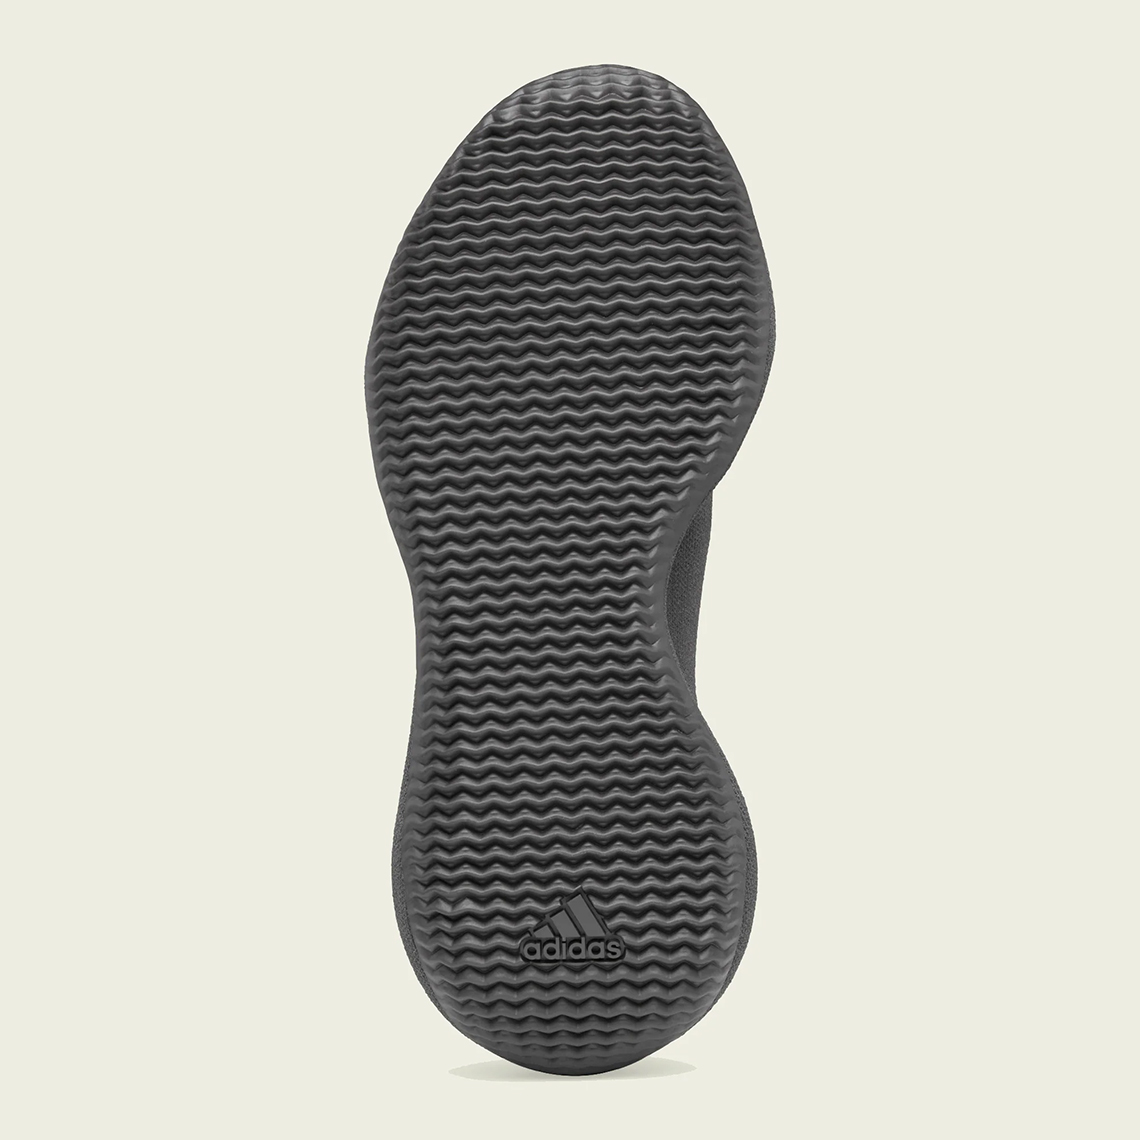 adidas yeezy knit runner fade onyx IE1663 2